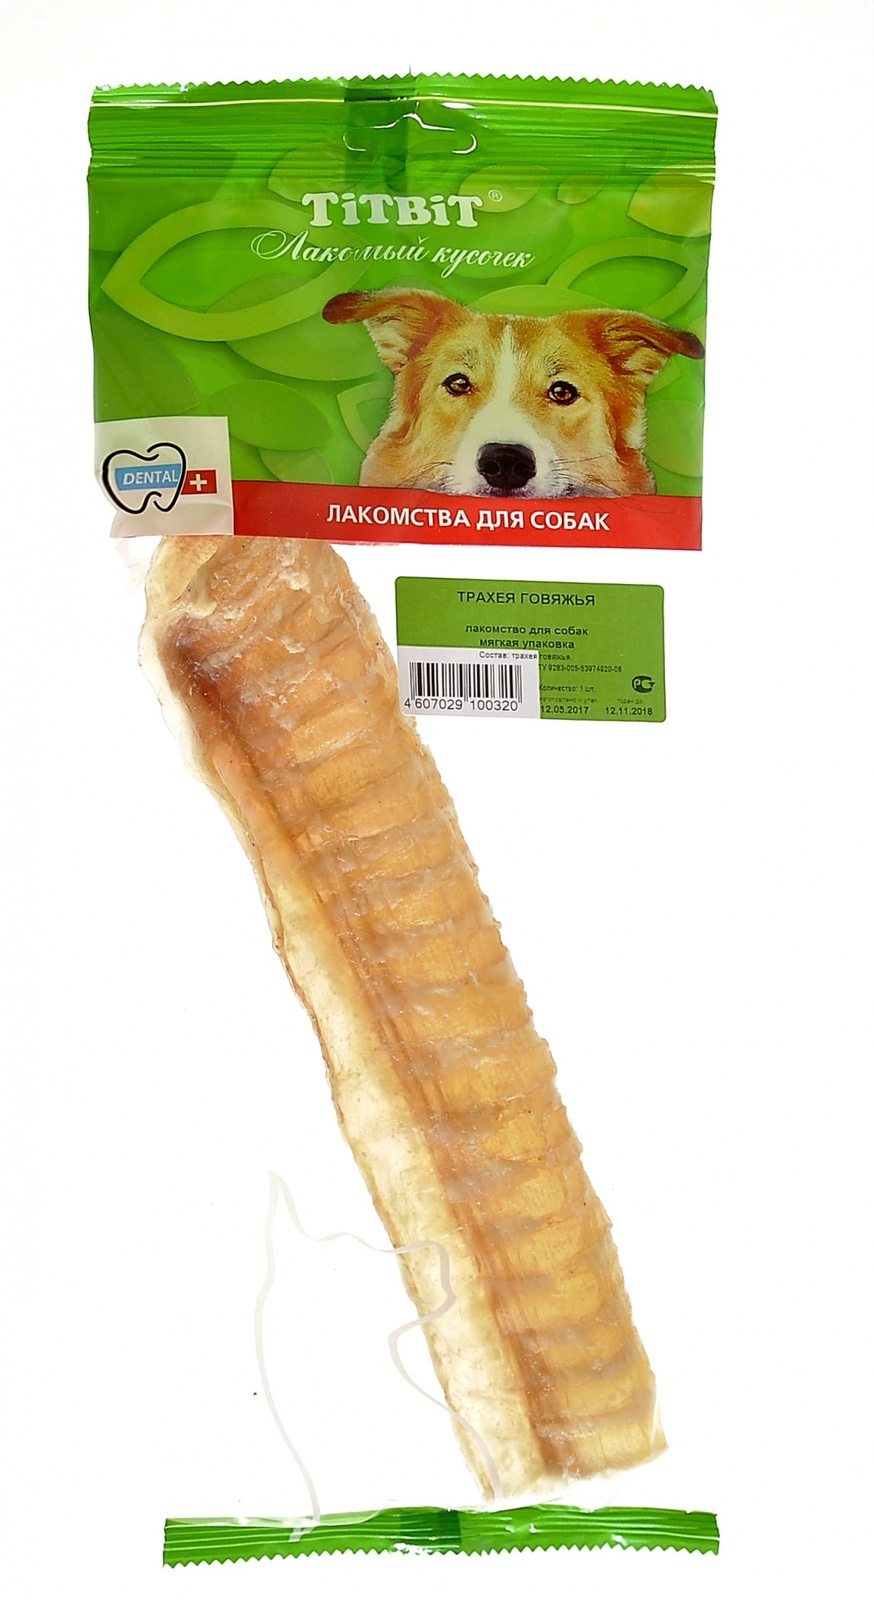 TiTBiT TiTBiT трахея говяжья, 24-26 см (61 г) organic сhoice лакомство для собак трахея говяжья 50 г